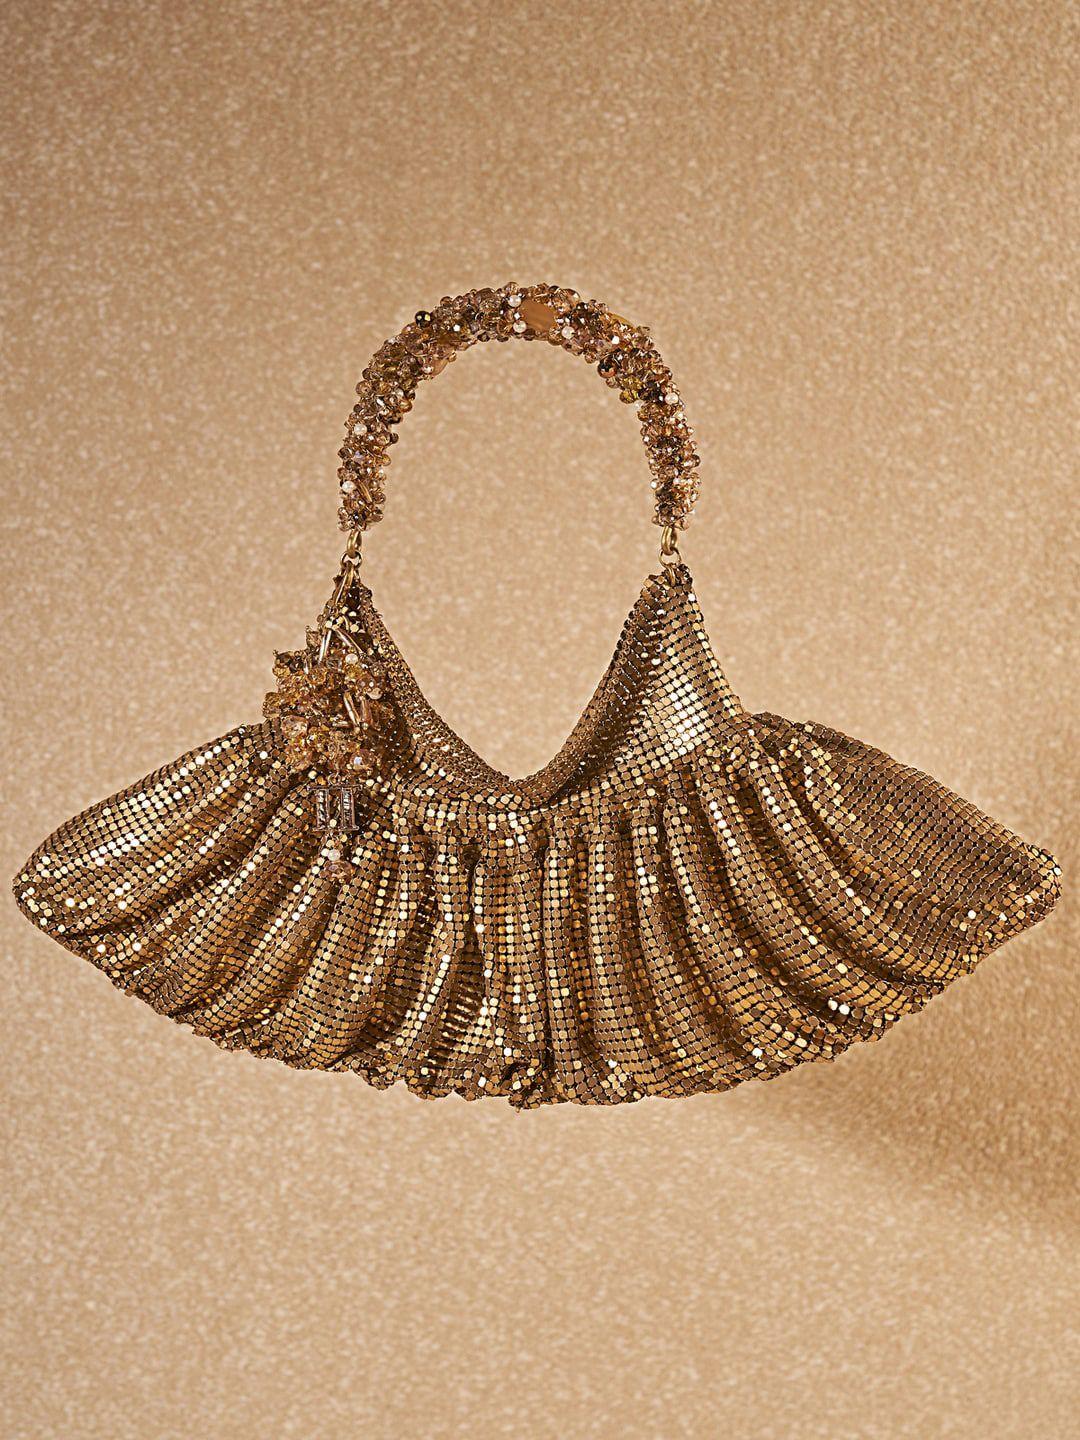 tarun tahiliani gold-toned embellished handheld bag